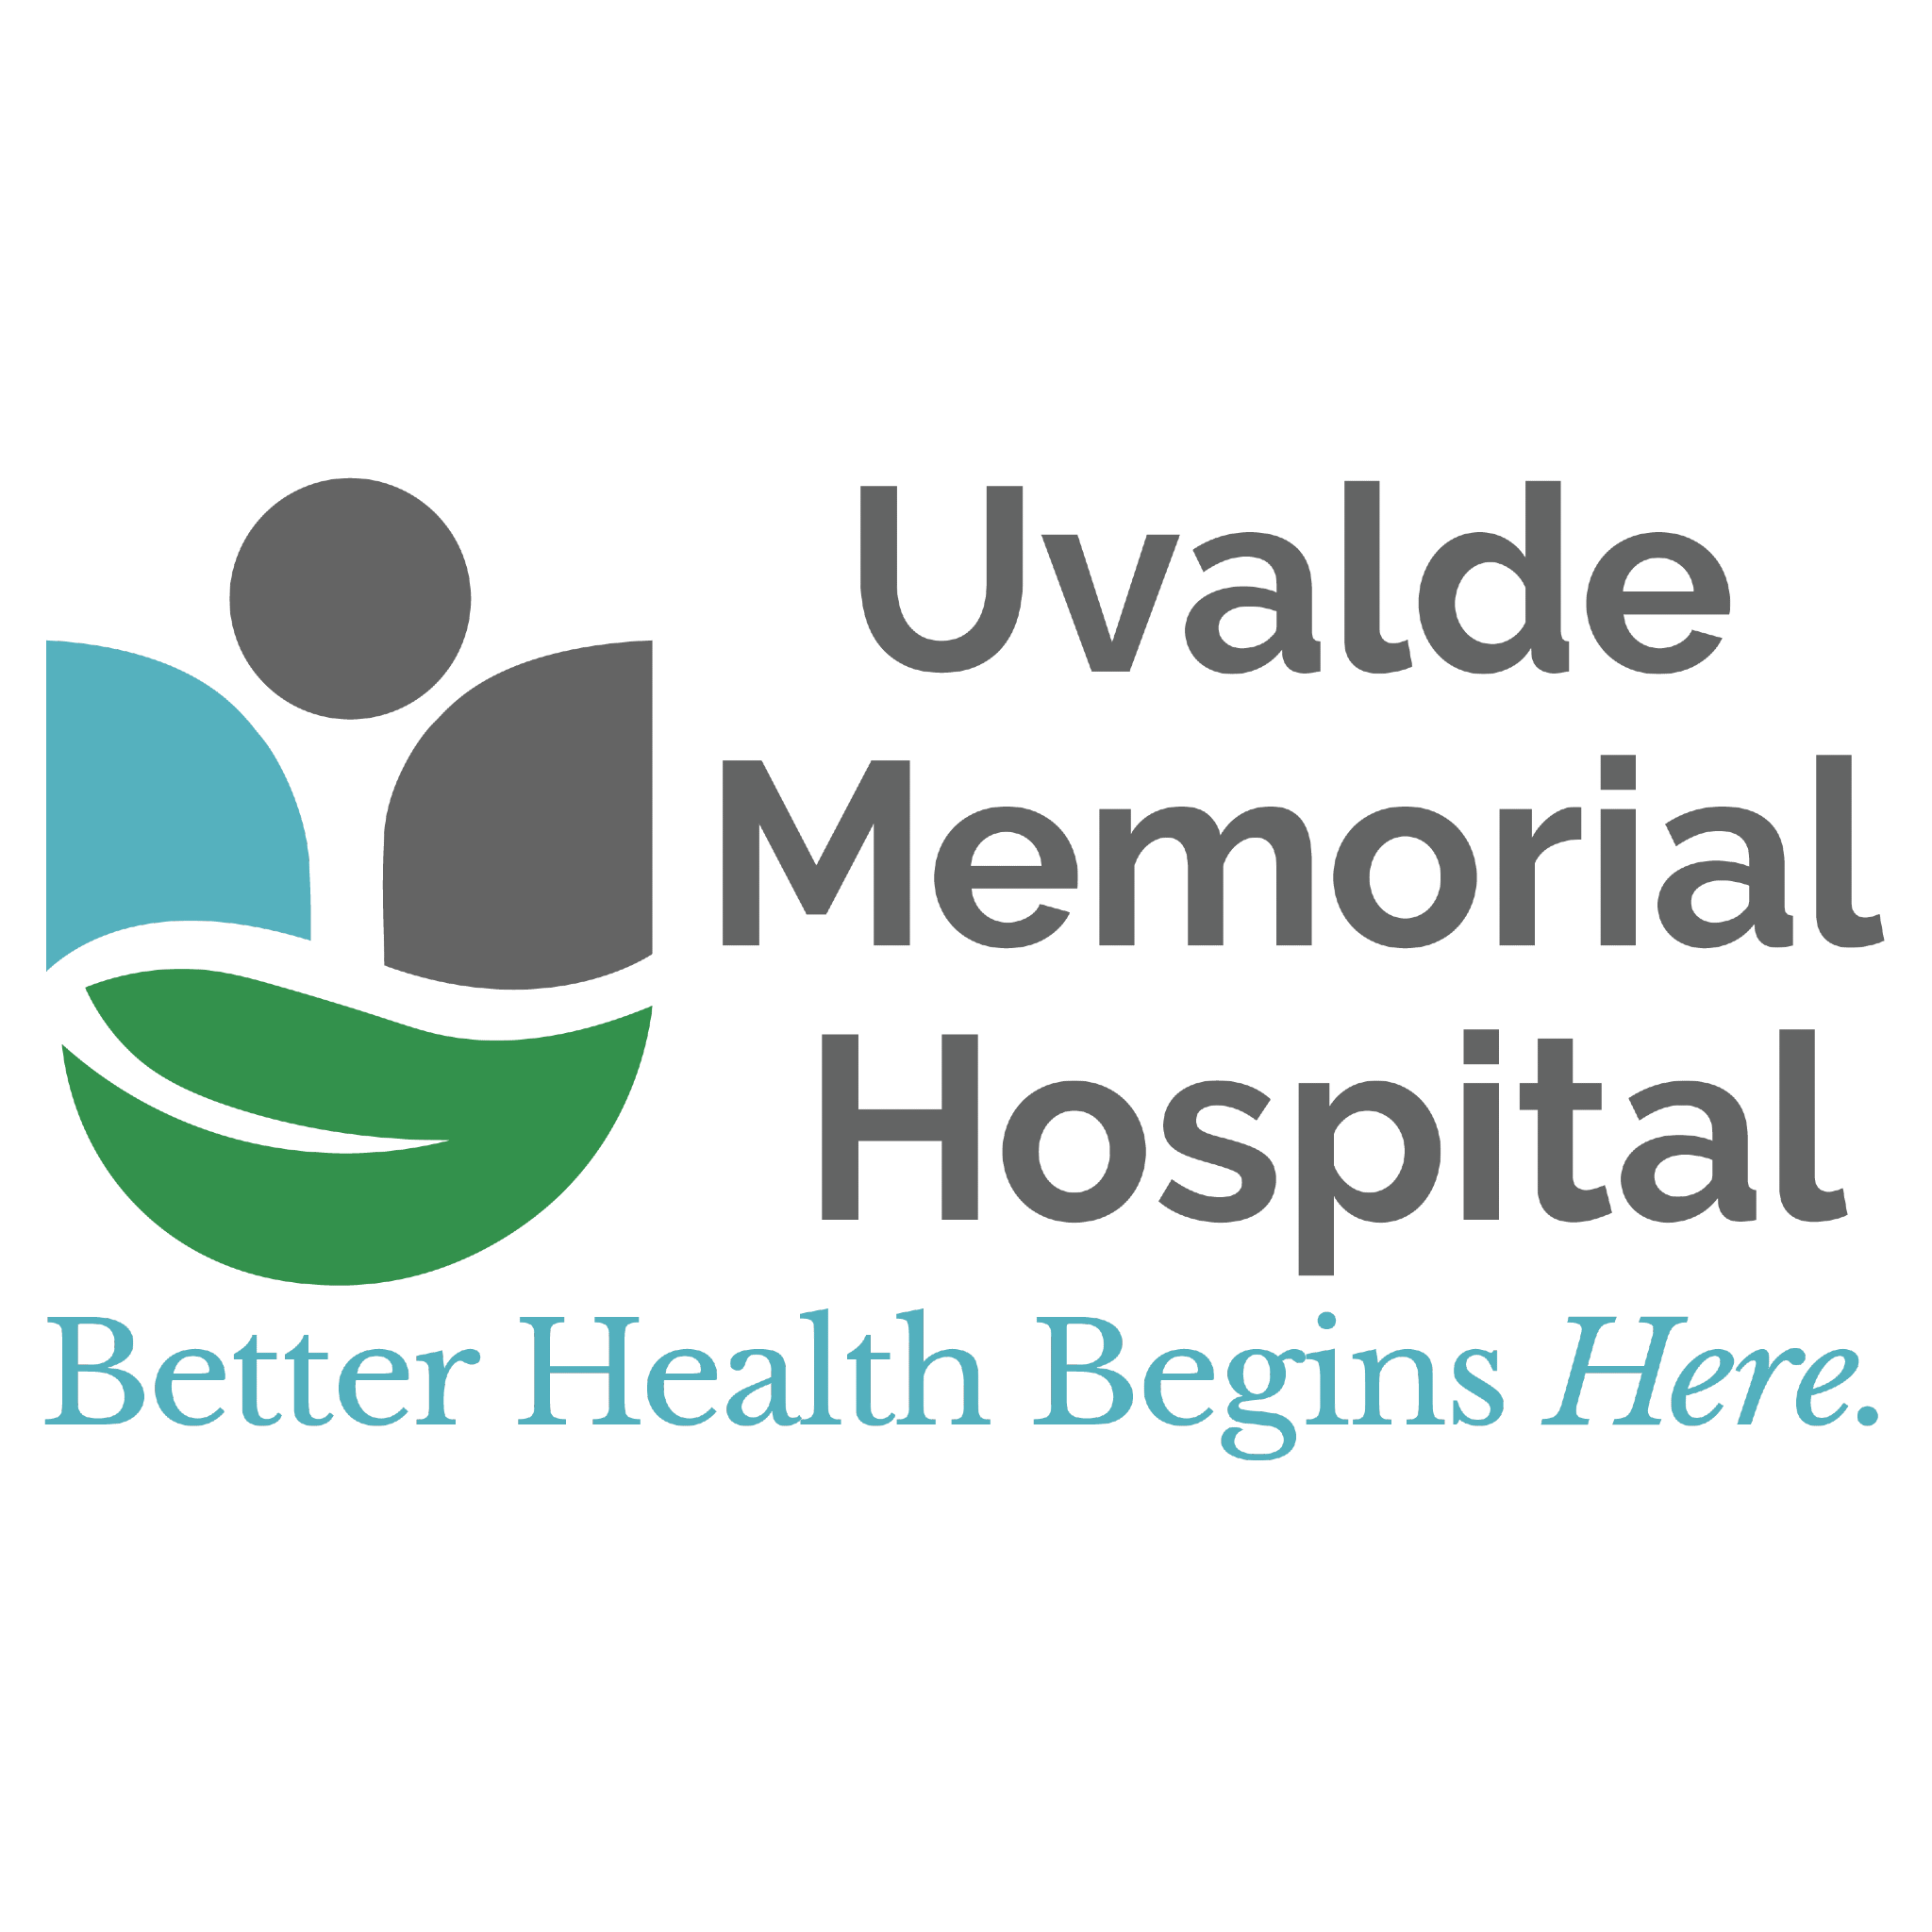 Art for Uvalde Memorial Hospital by General Information